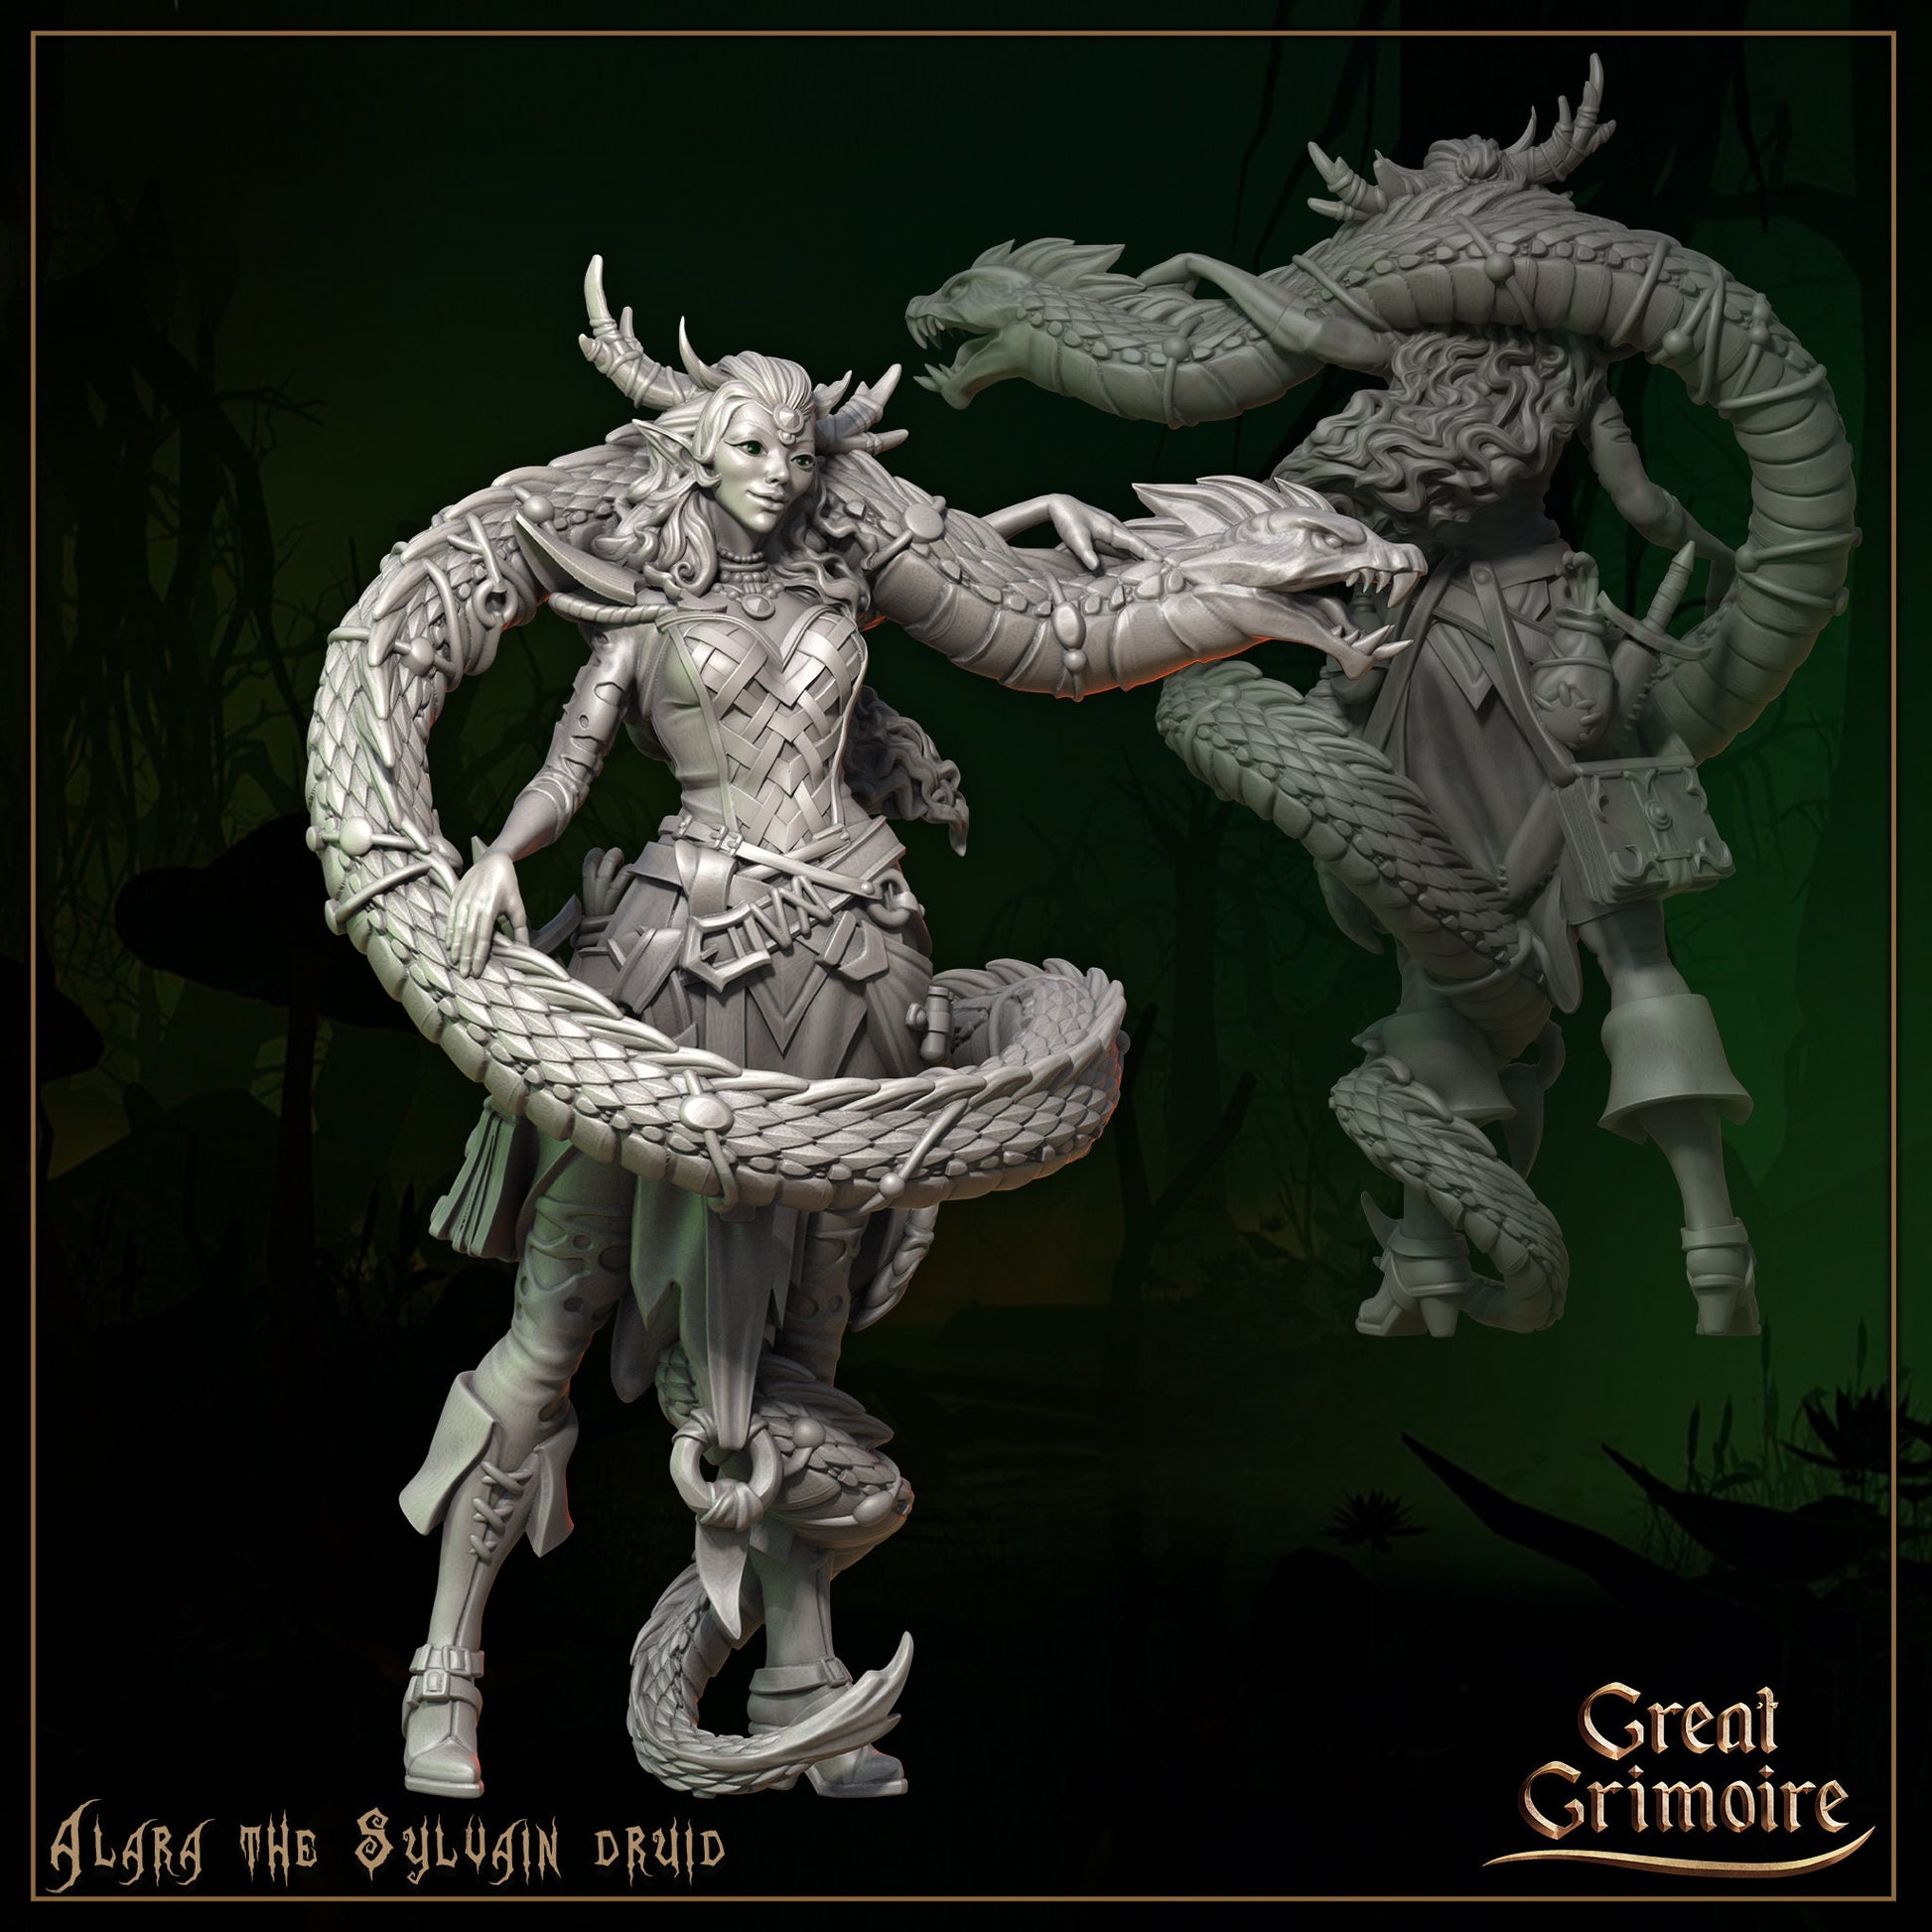 Alara the Sylvan Druid - Great Grimoire Printed Miniature | Dungeons & Dragons | Pathfinder | Tabletop